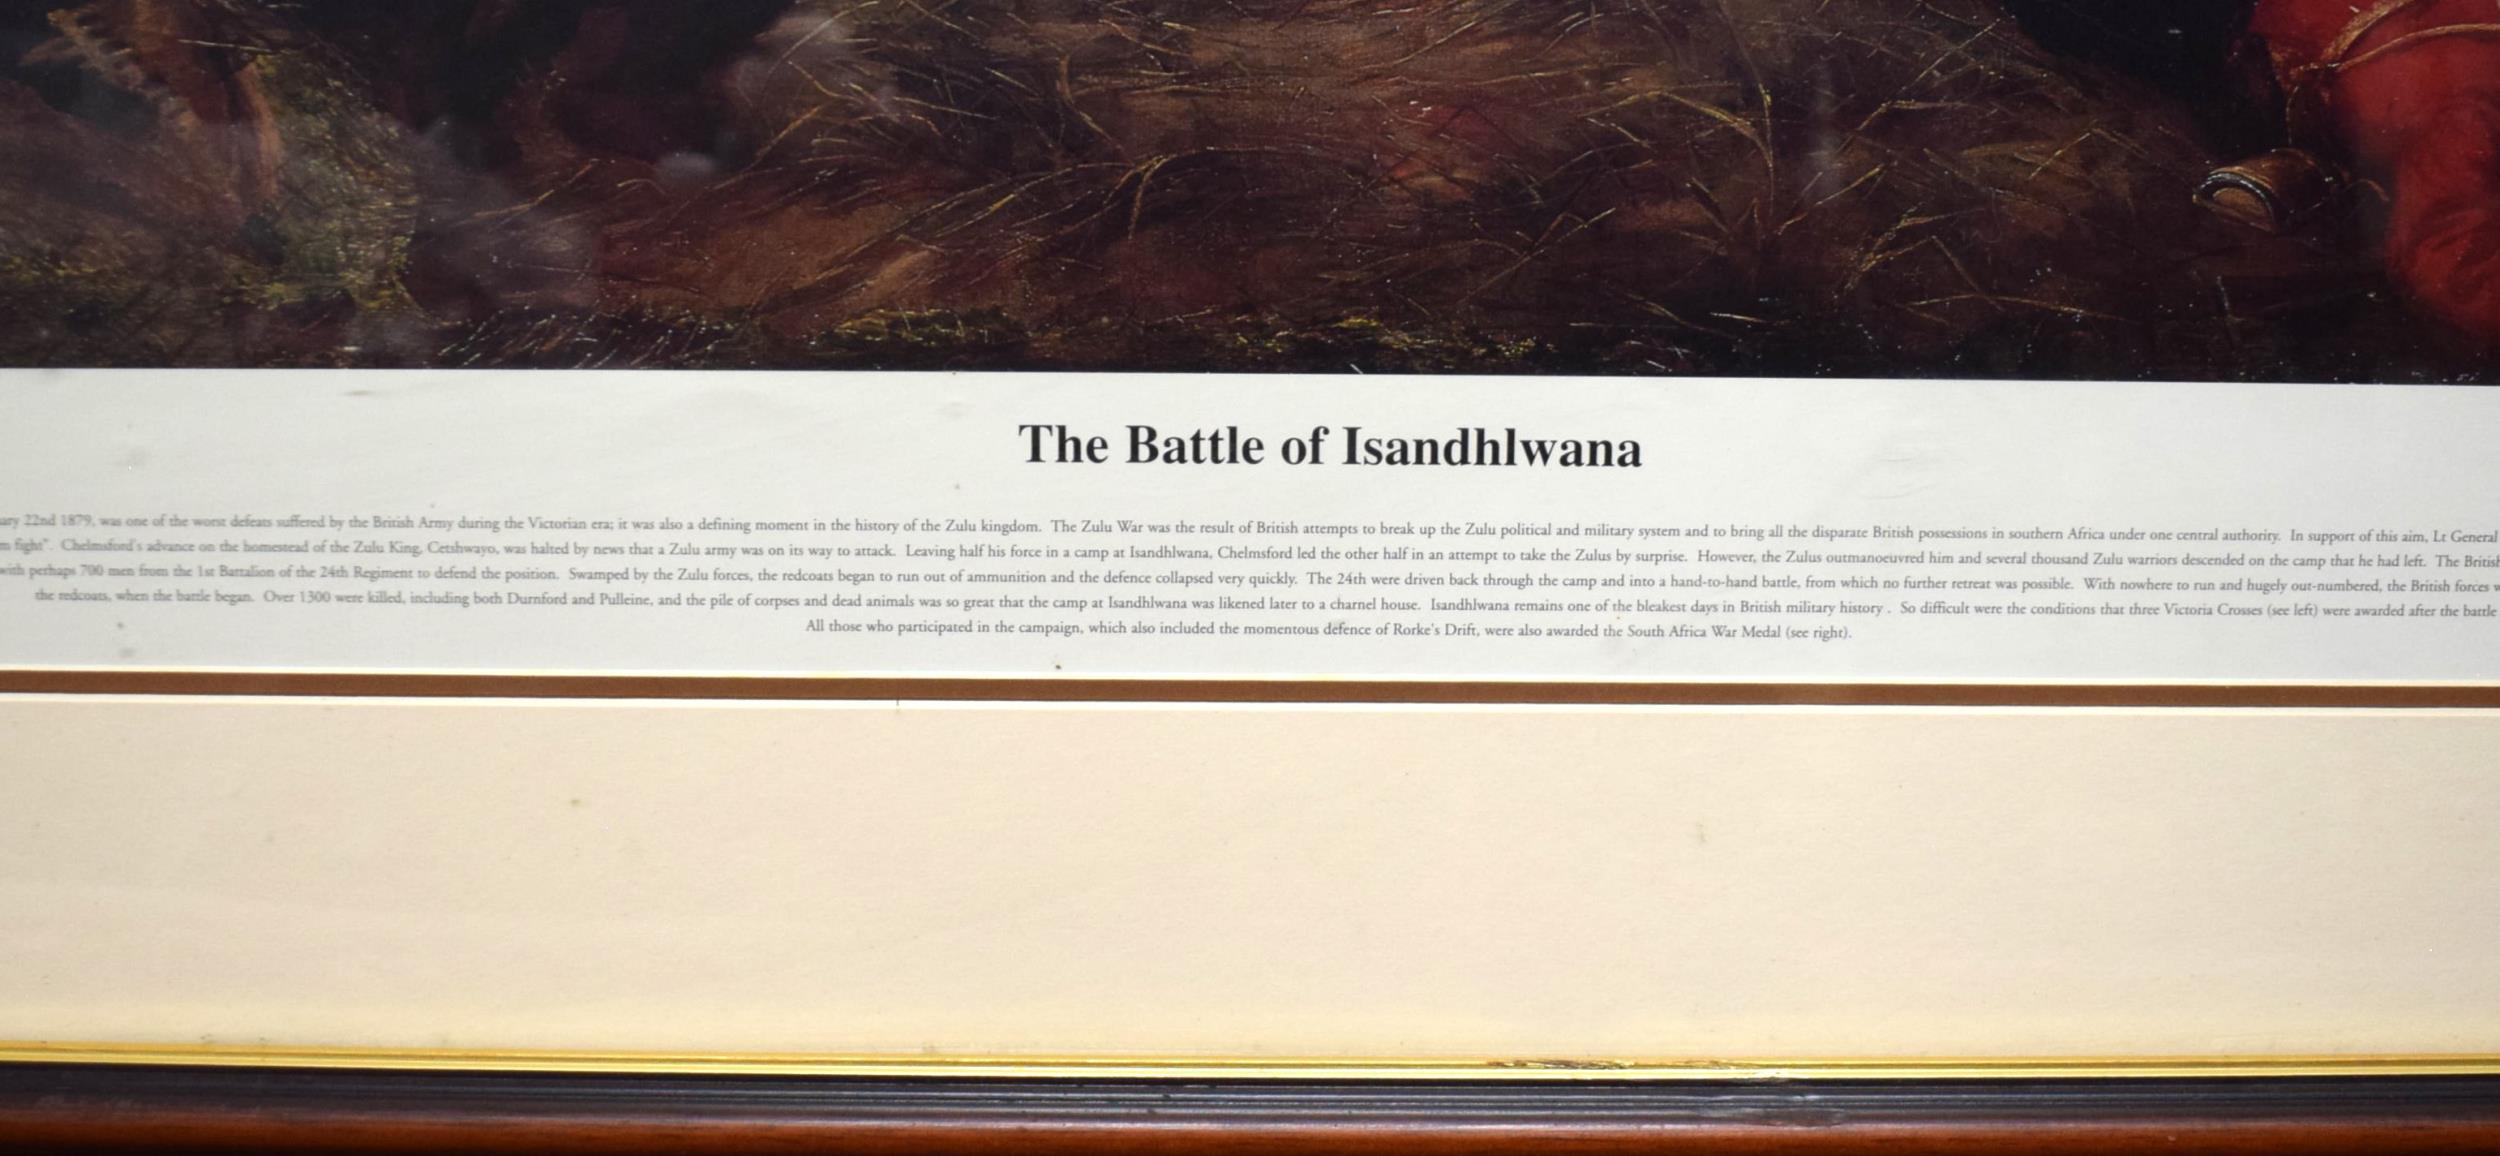 Large Framed Print 'The Battle of Isandlwana' 1879 Zulu War.  In impressive ornate Frame. Measures a - Image 2 of 2